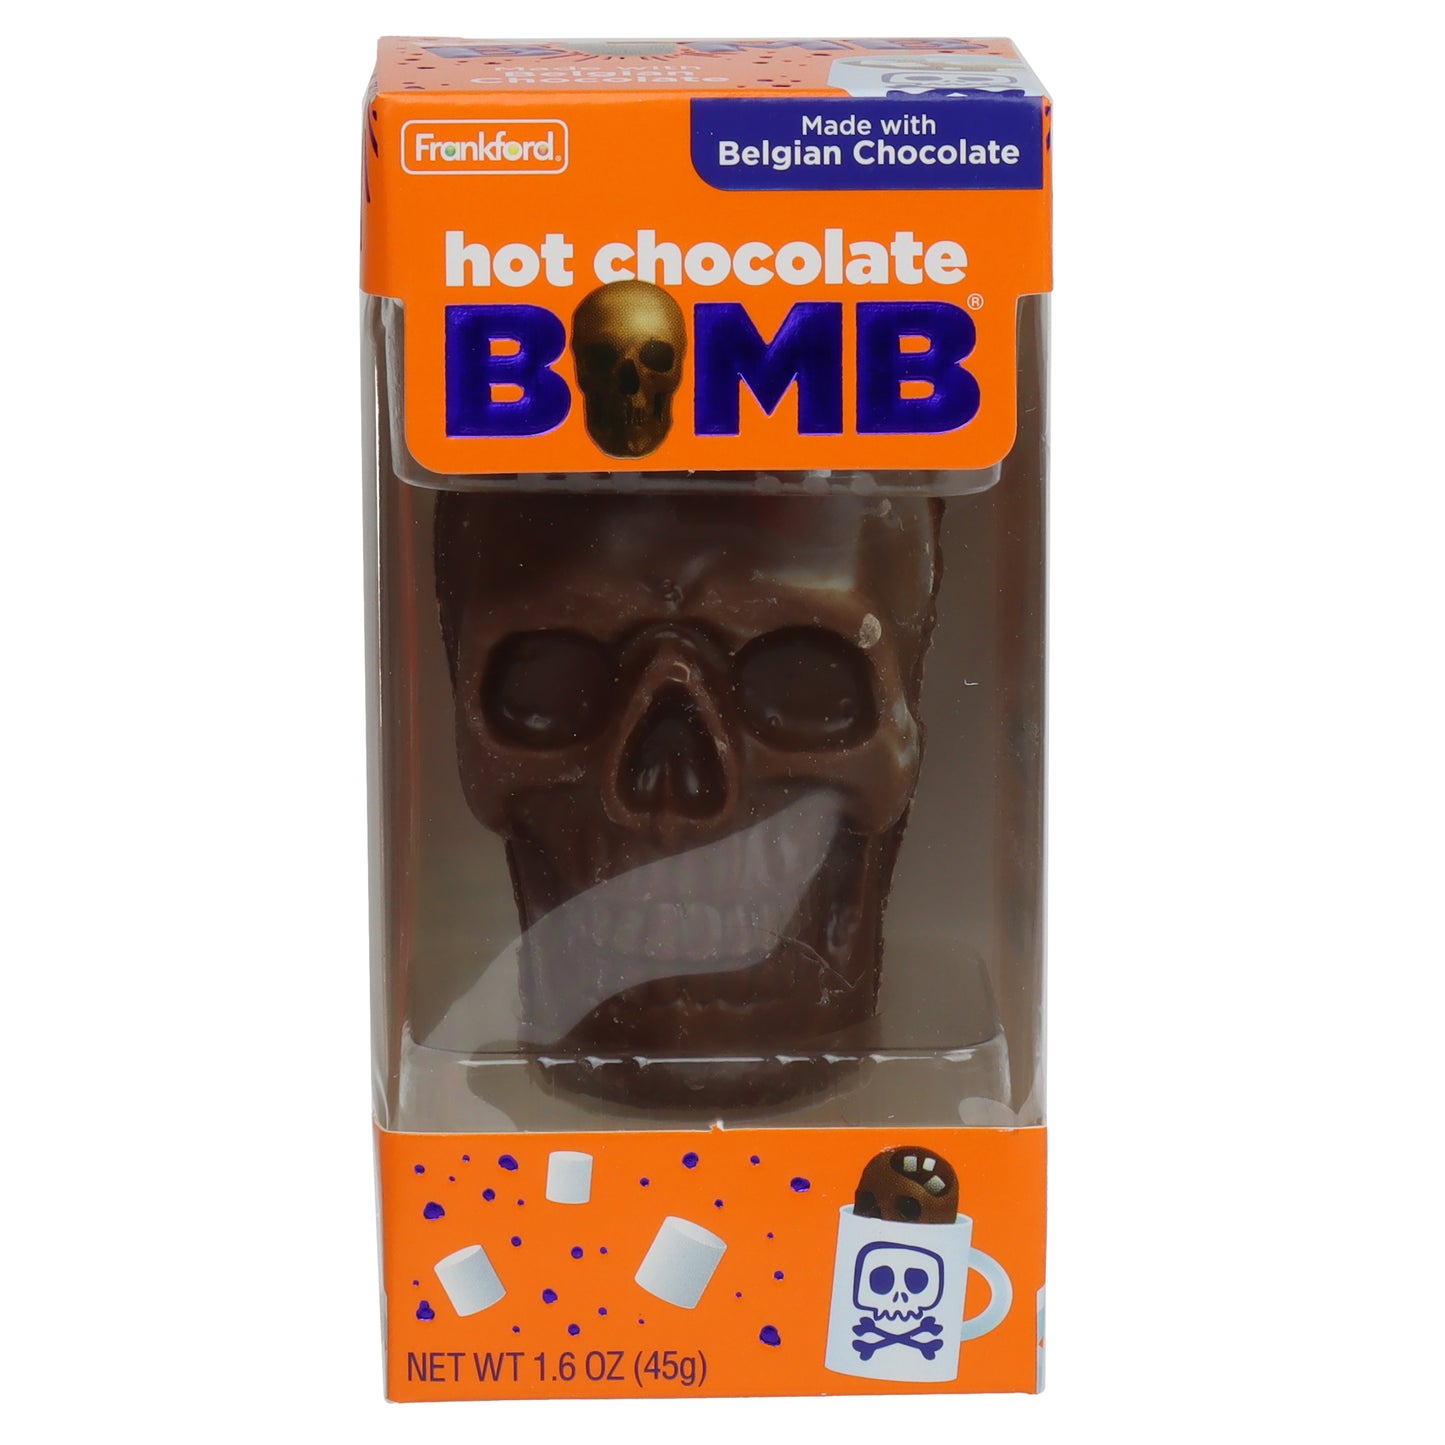 orange box with brown chocolate molded skull